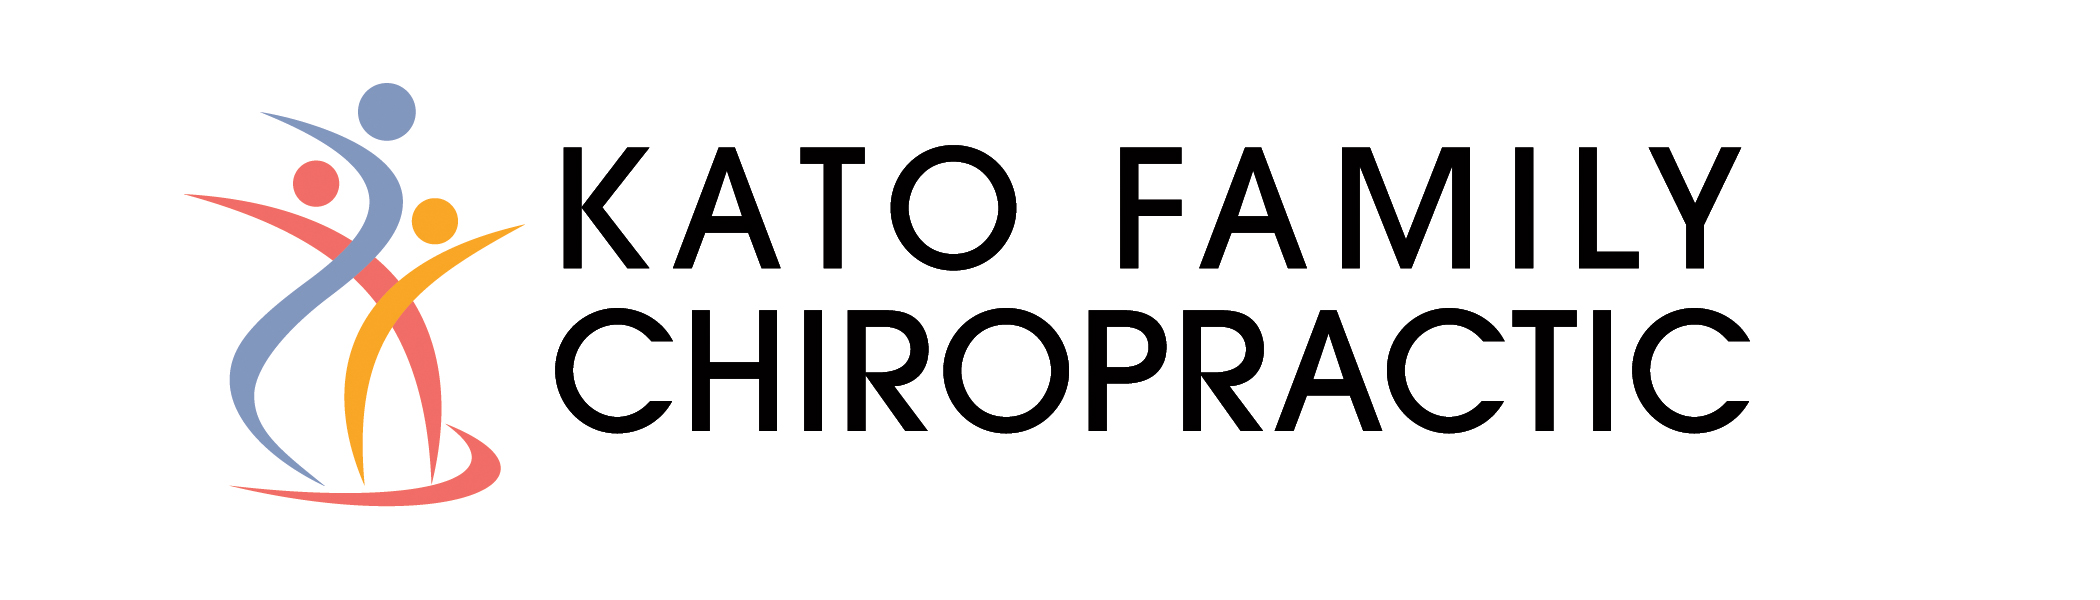 Kato Family Chiropractic